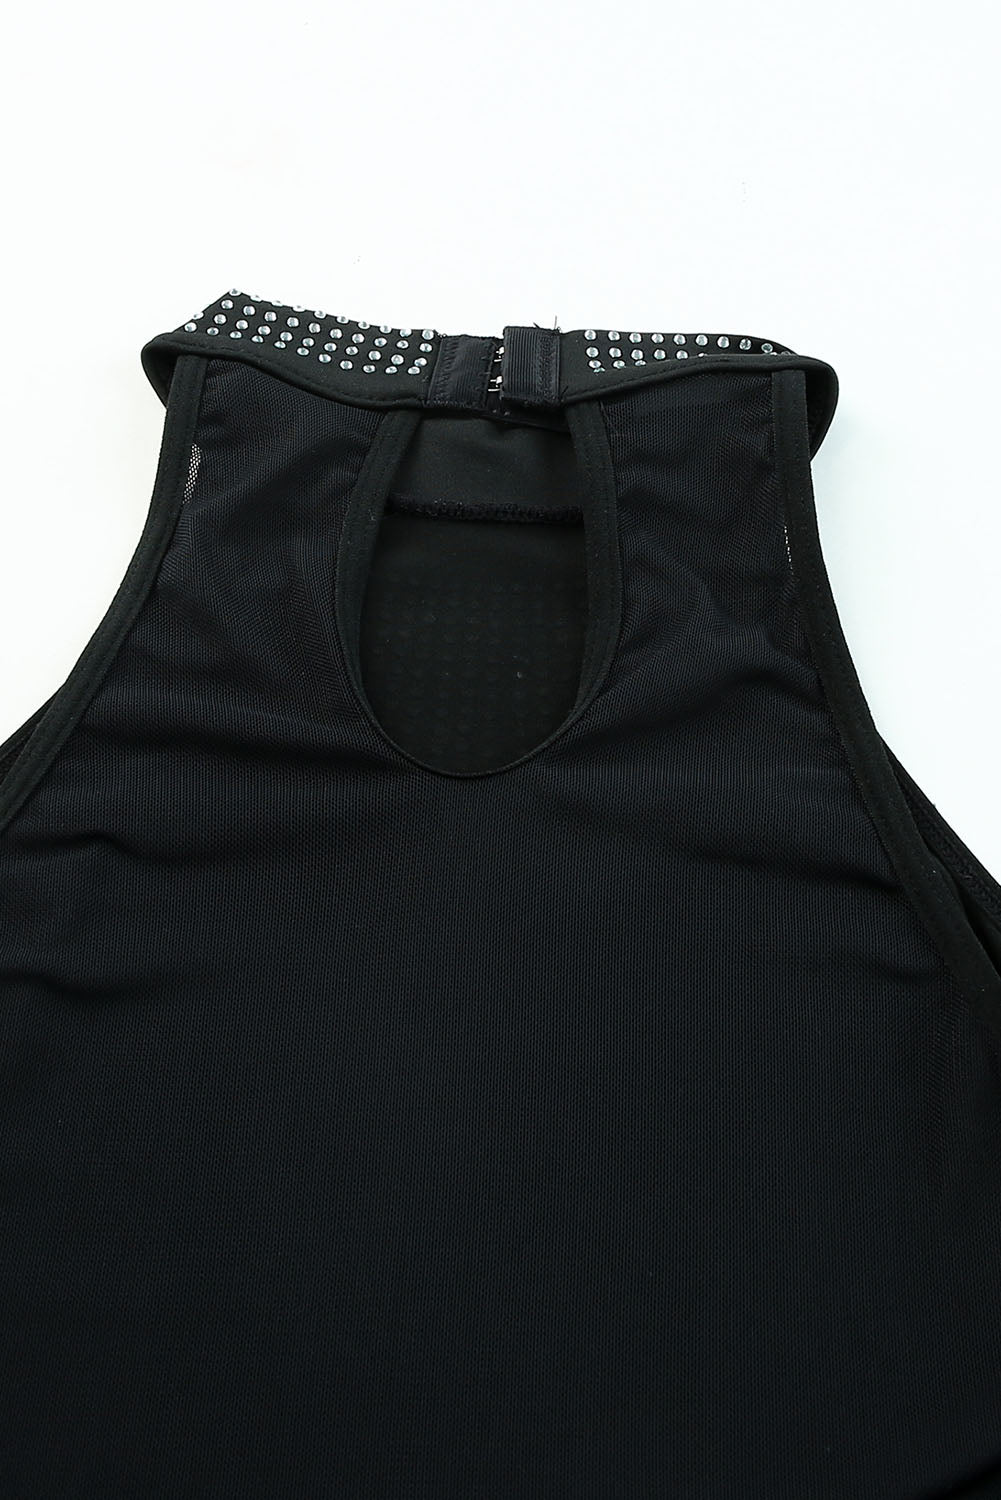 Black High Neck Sleeveless Diamante Bodysuit-16